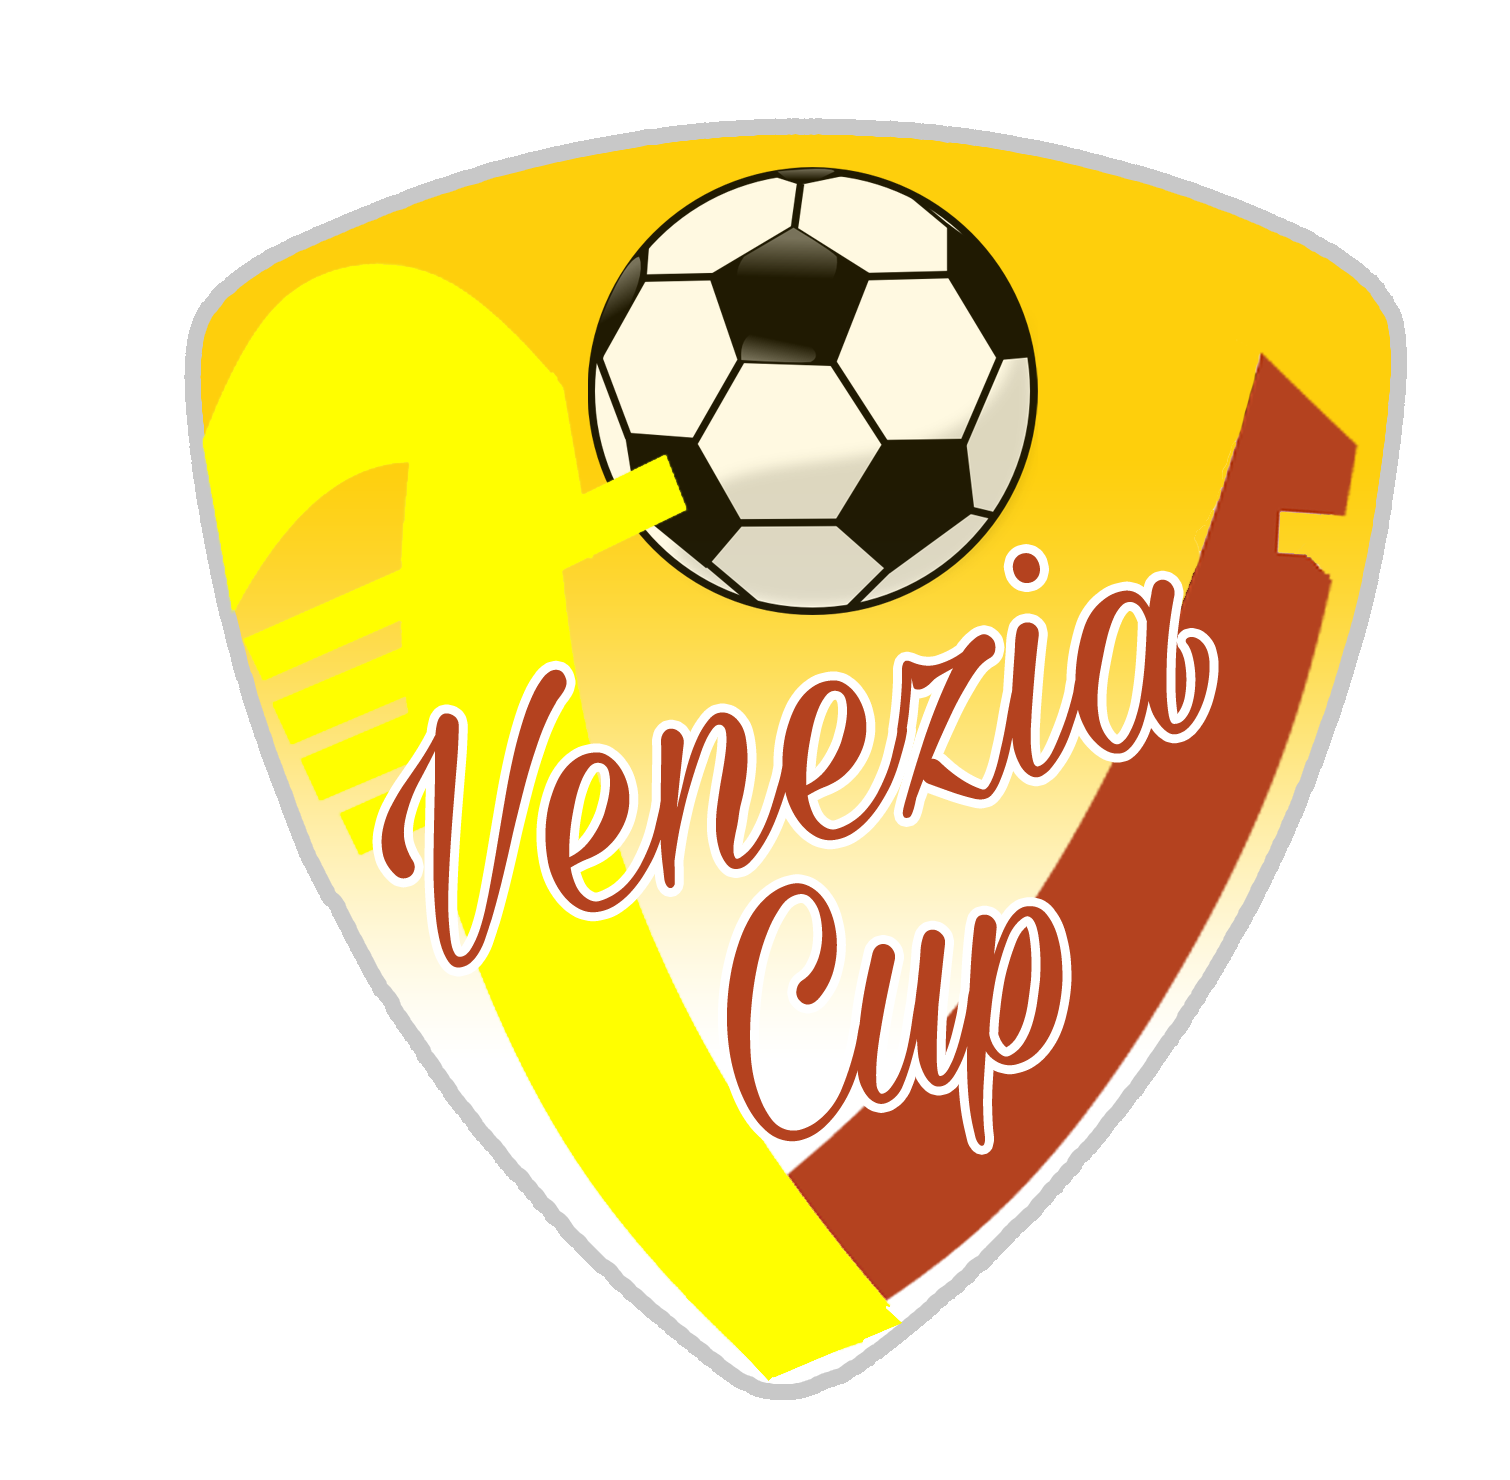 Venezia Cup - boys & girls